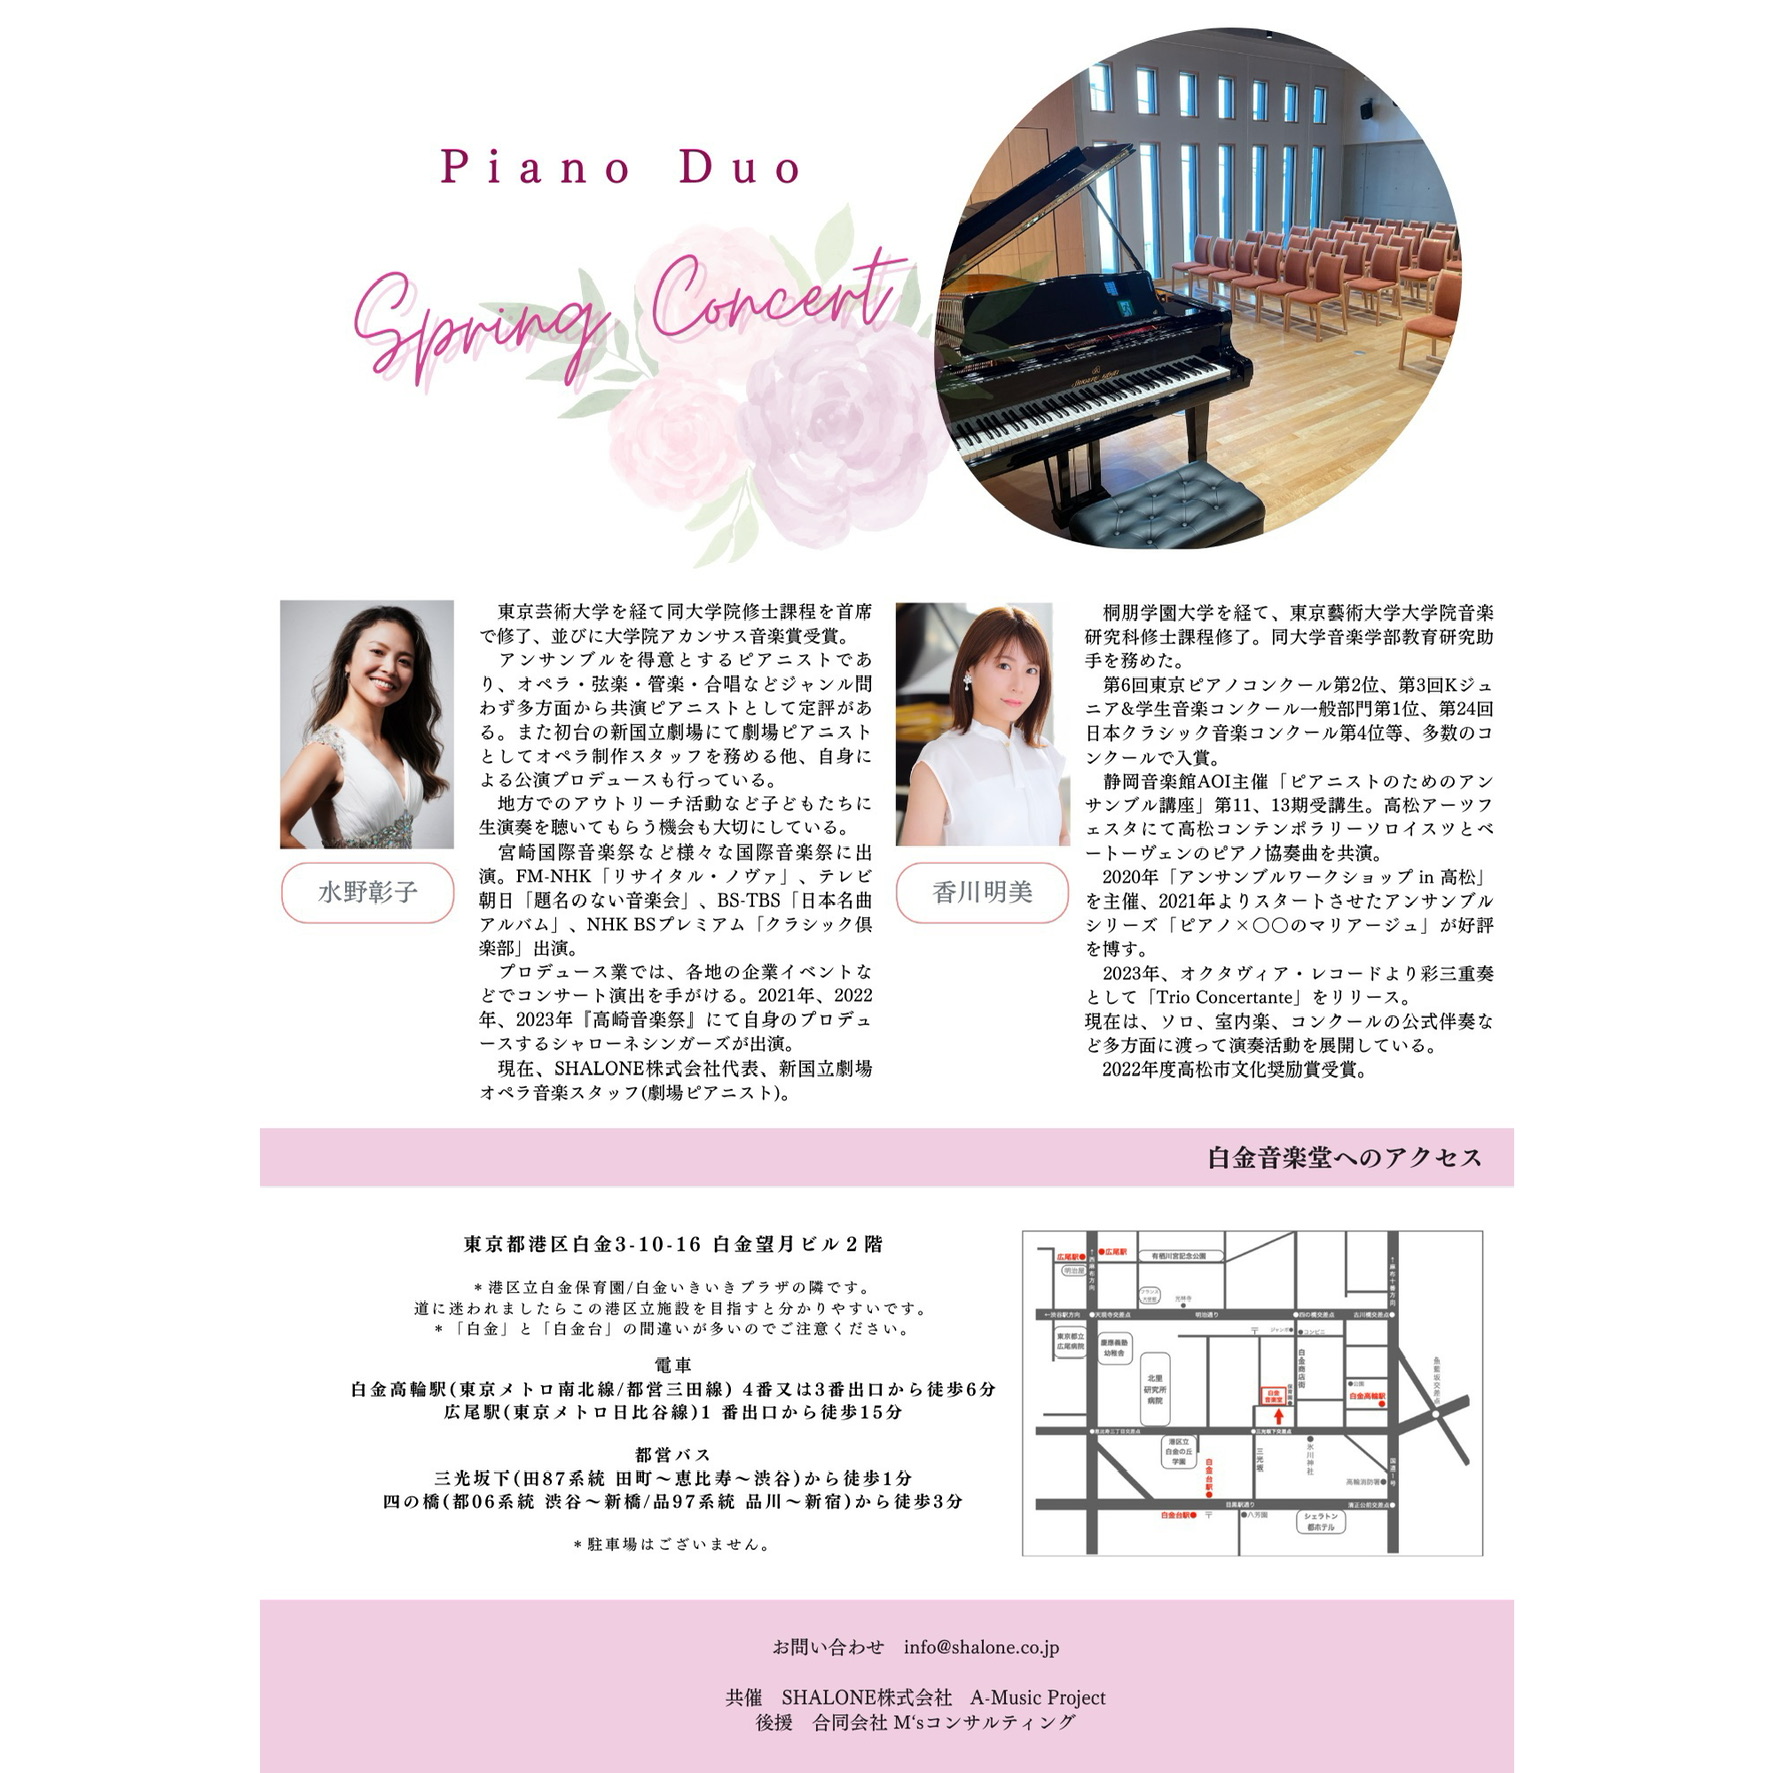 Spring Concert 〜Piano Duo〜